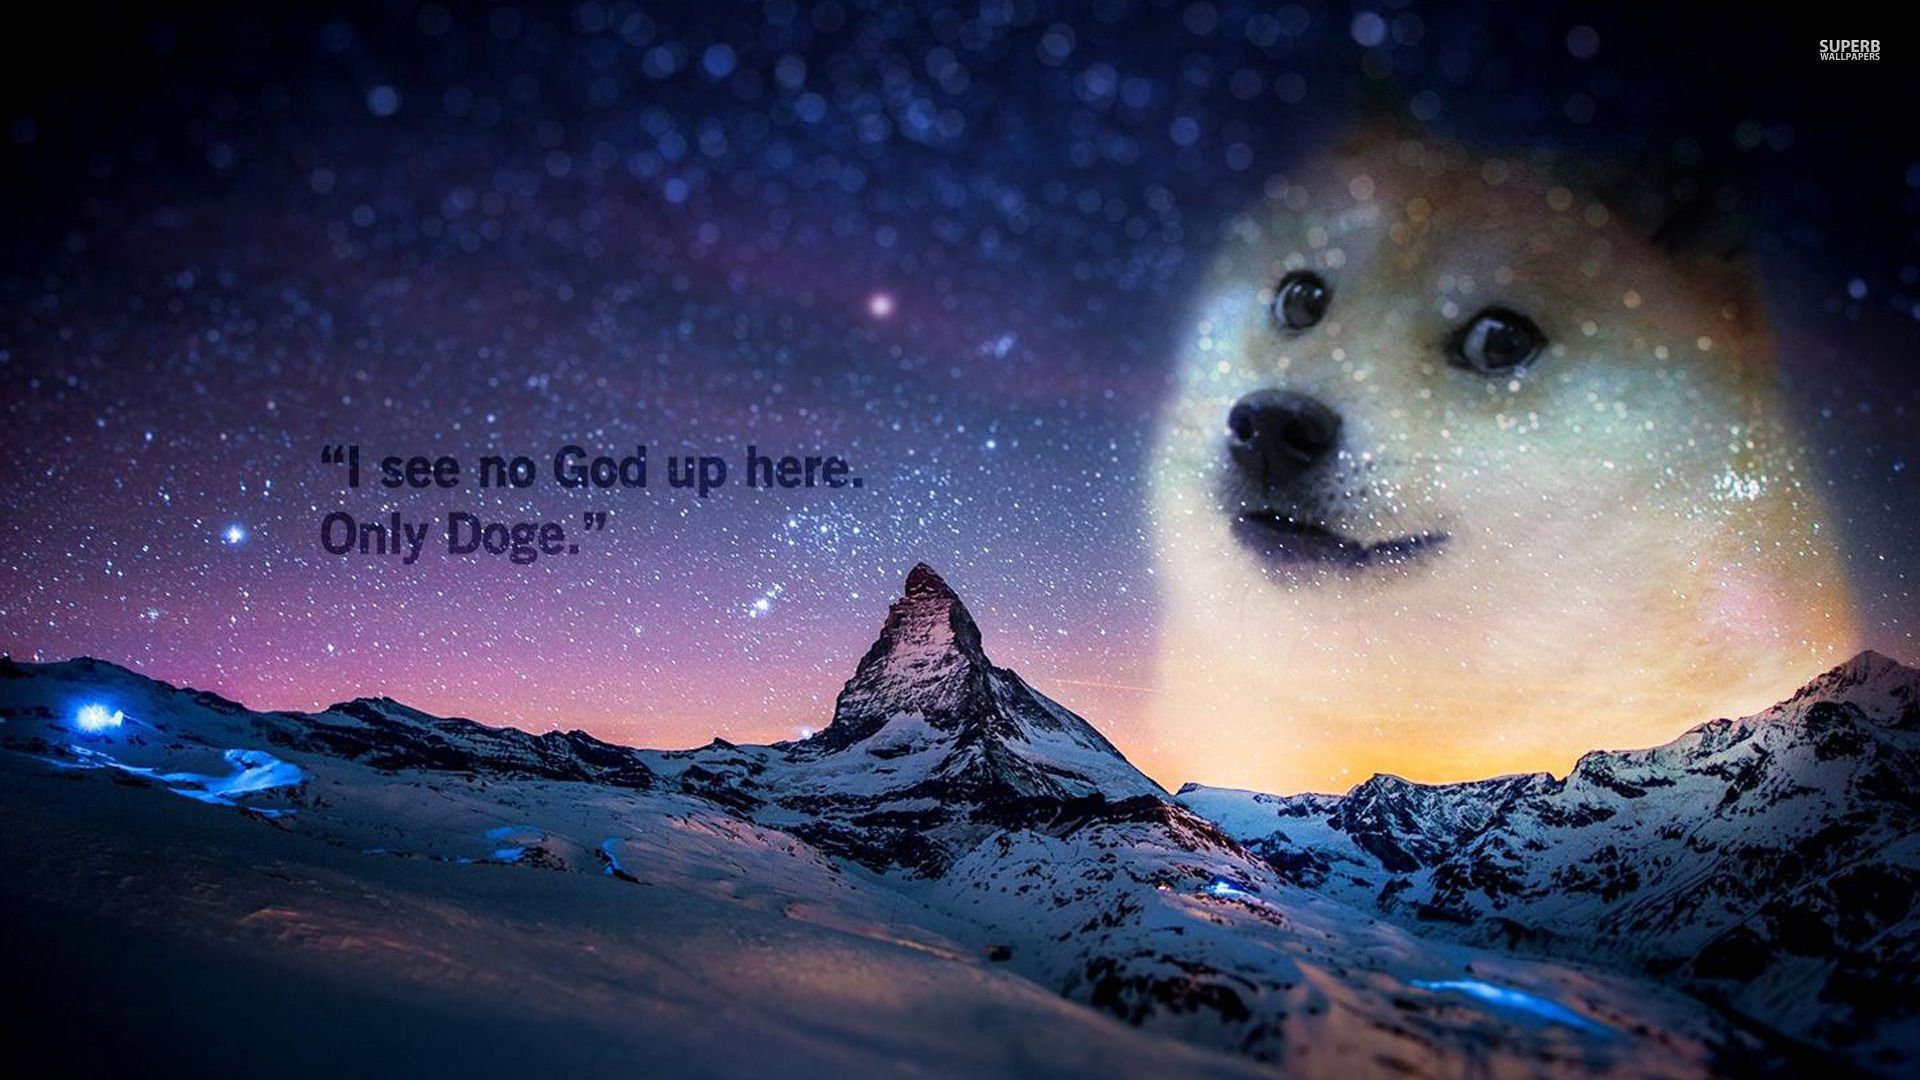 Doge wallpaper - Meme wallpapers -